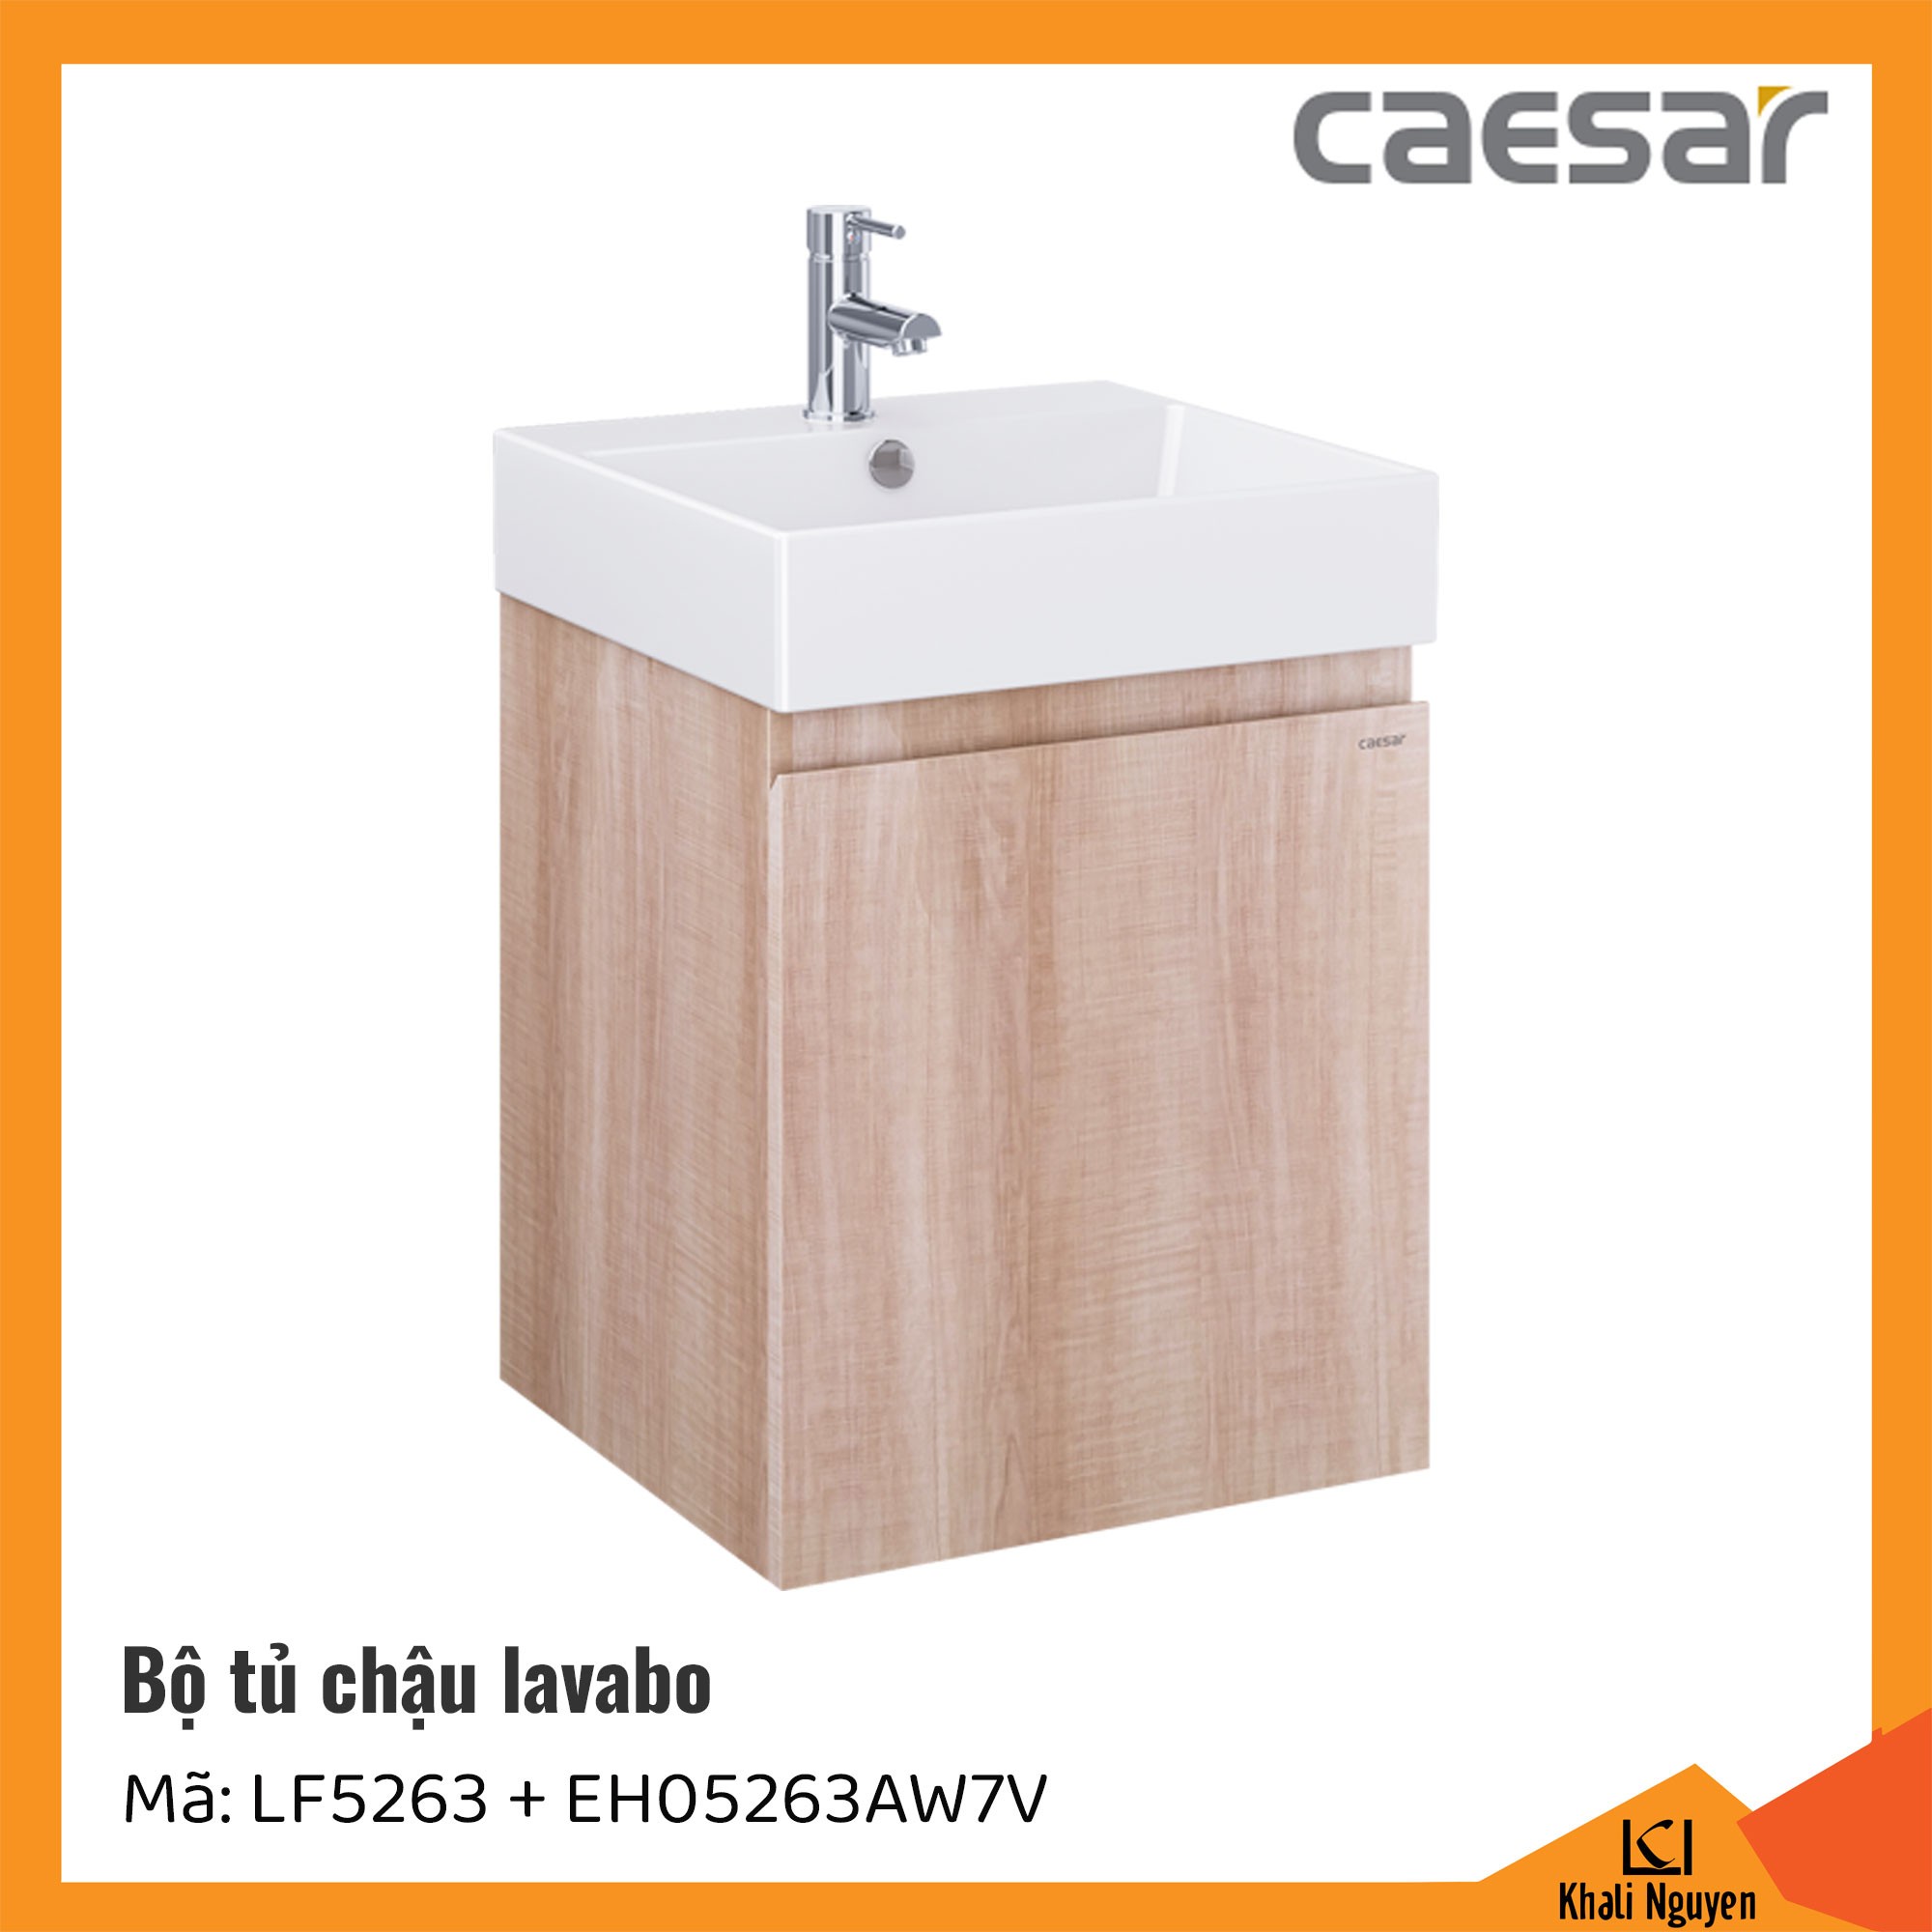 Bộ tủ chậu lavabo Caesar LF5263+EH05263AW7V